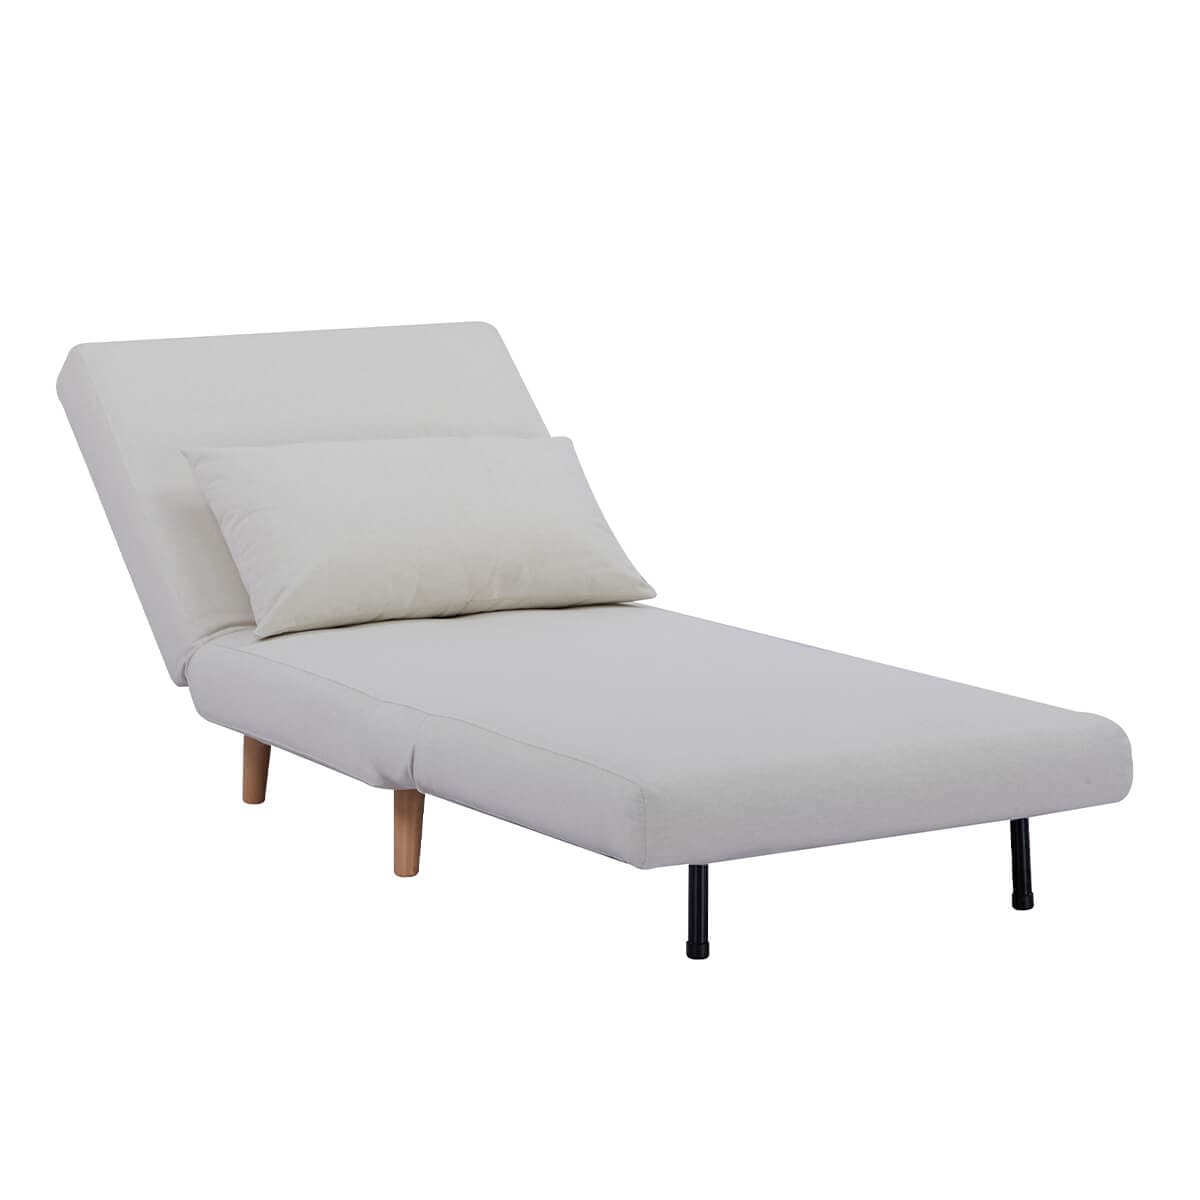 Seattle Single Click Clack Sofa Bed - Warm Natural - DUSK